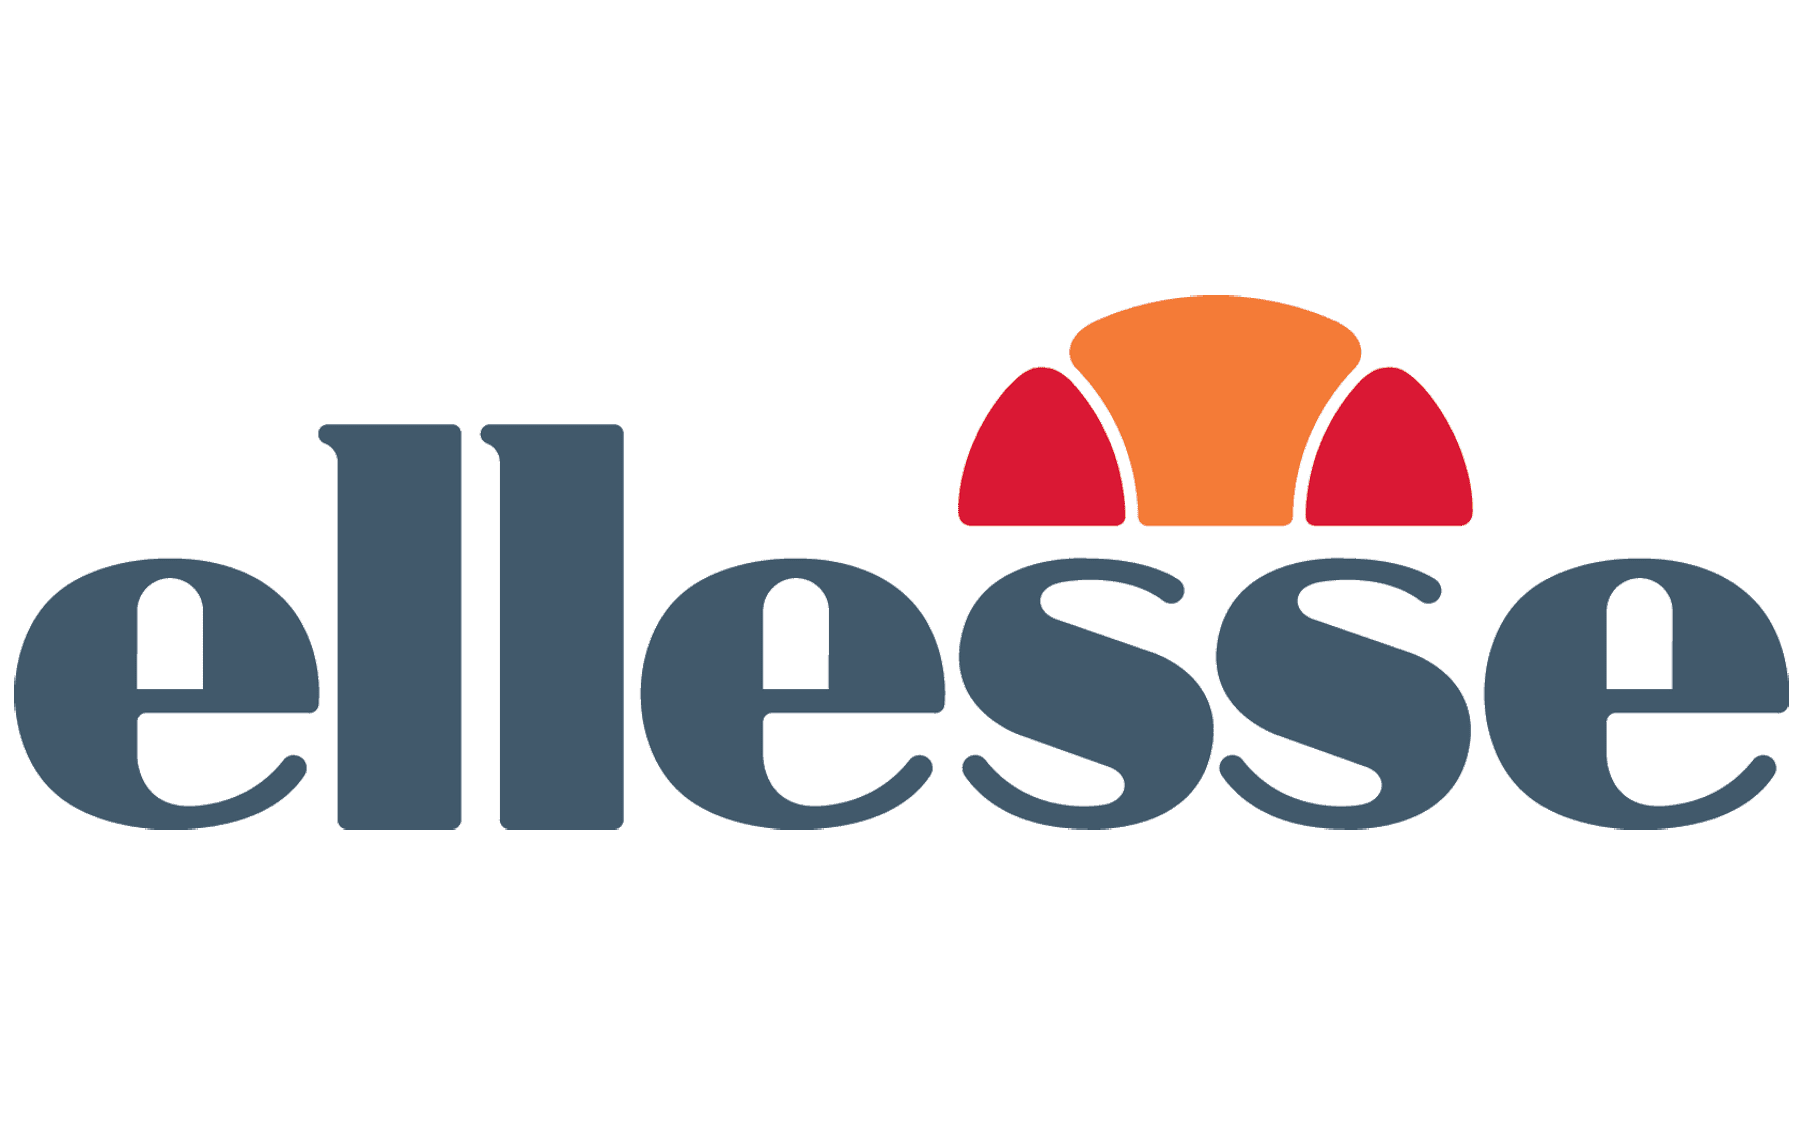 Ellesse logo and symbol, meaning 